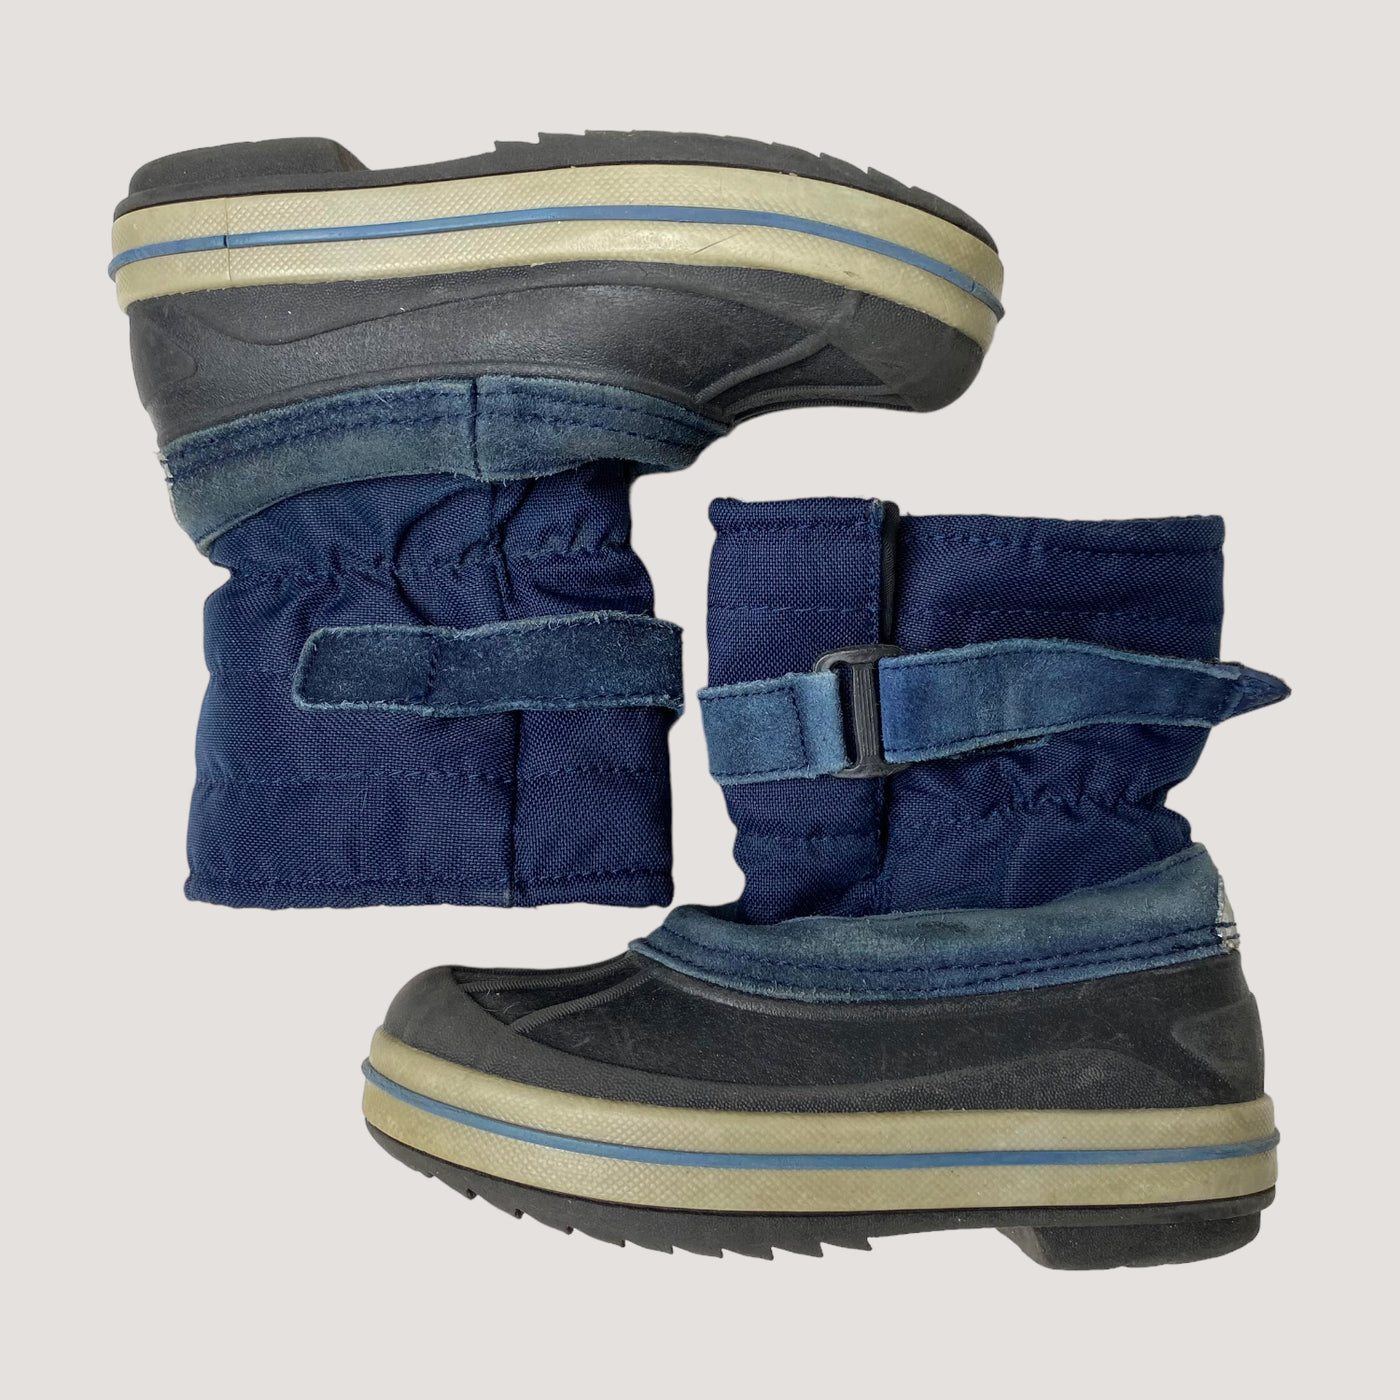 Reima winter boots, blue/black | 29